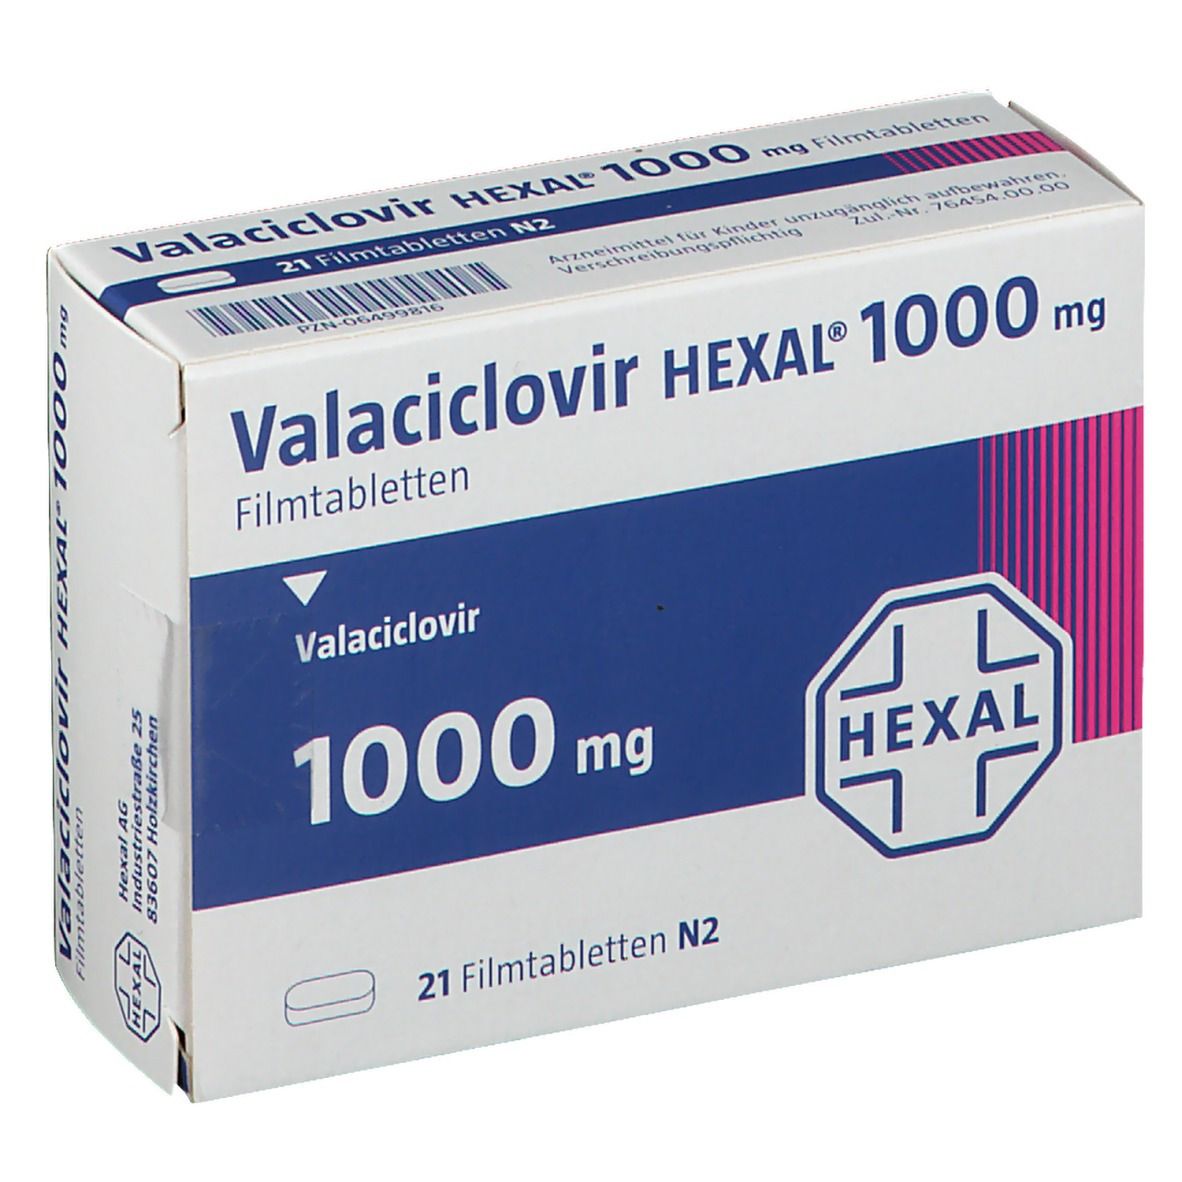 Valaciclovir HEXAL® 1000 mg